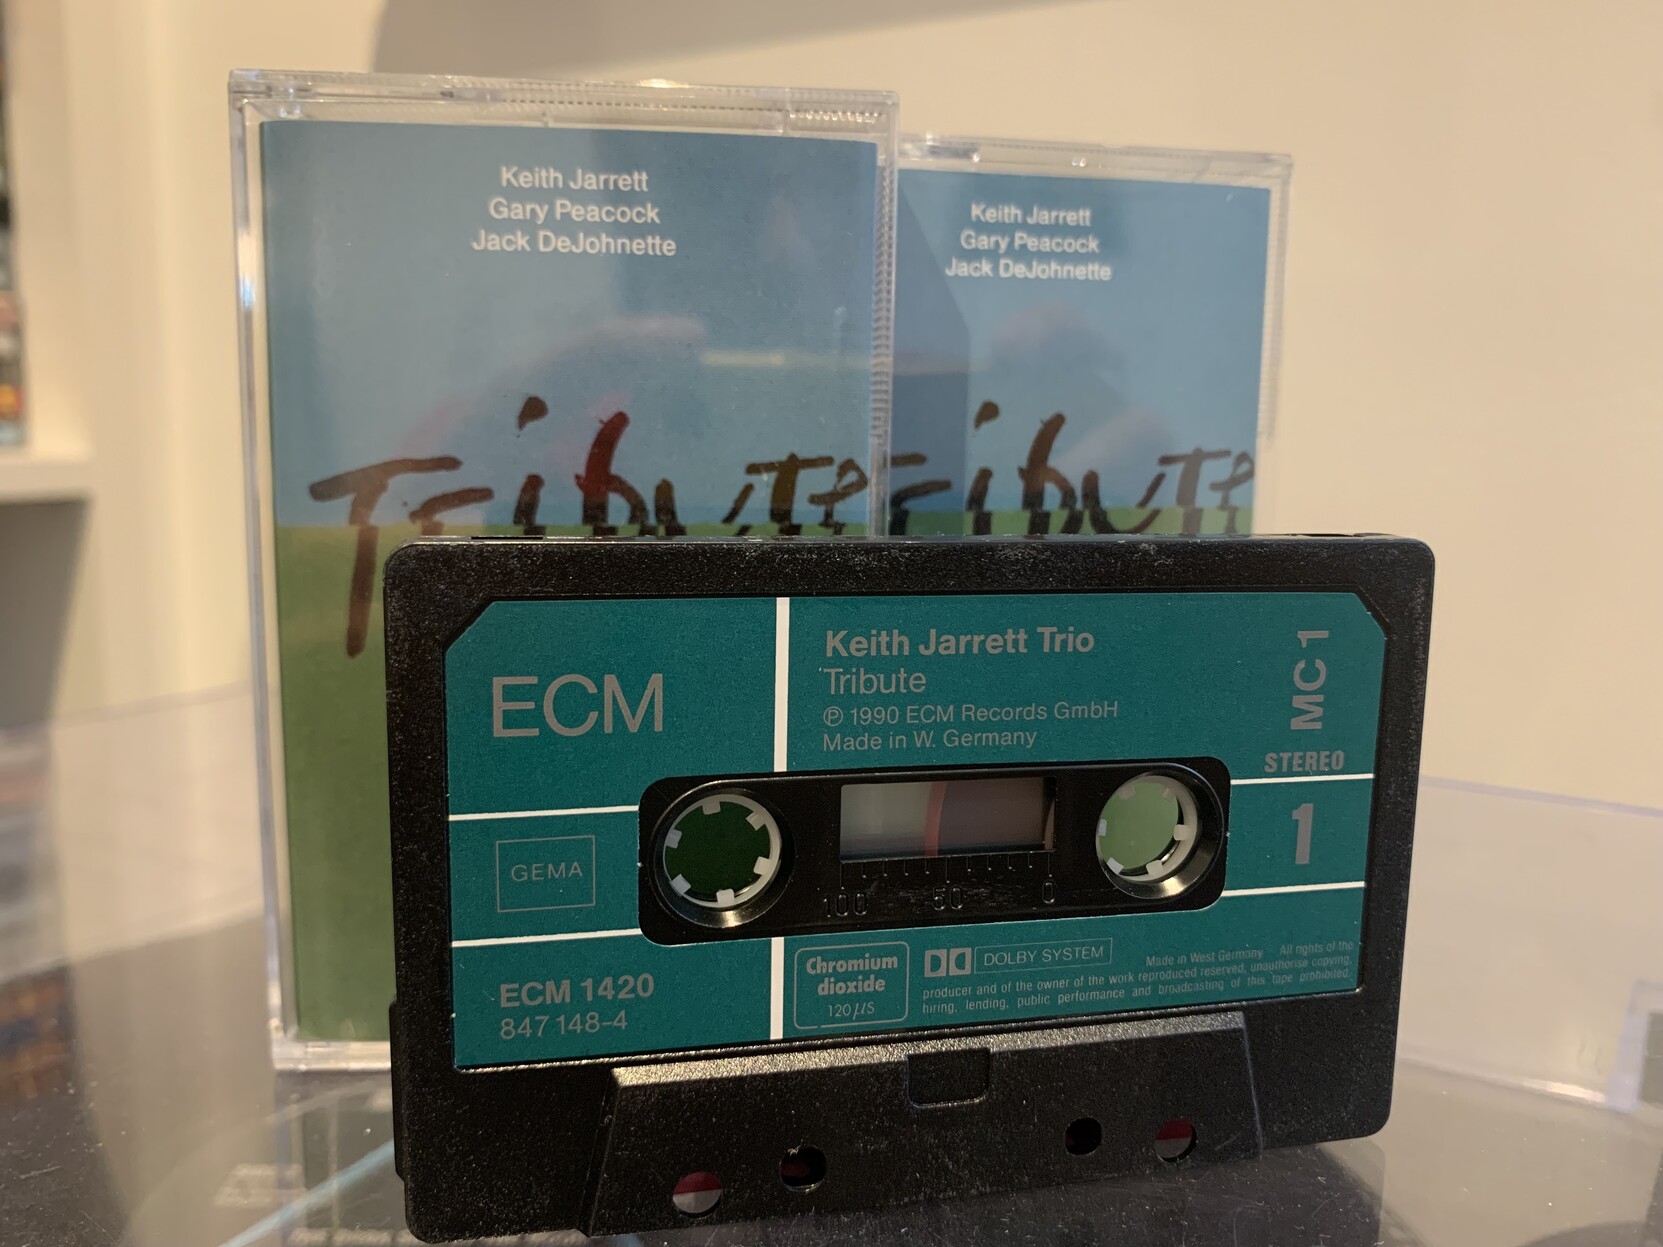 Double cassette album Tribute by Keith Jarret Trio